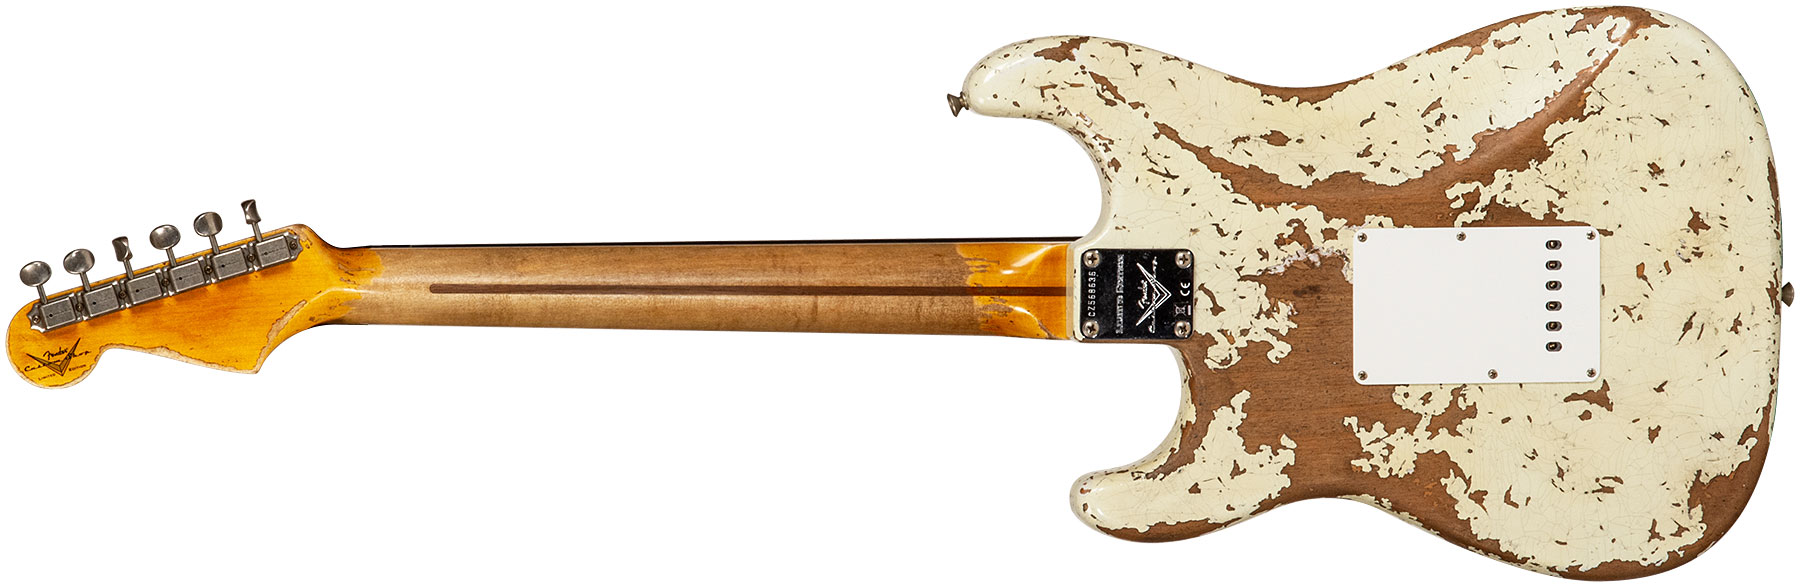 Fender Custom Shop Strat 1956 3s Trem Mn #cz568636 - Super Heavy Relic Aged India Ivory - Elektrische gitaar in Str-vorm - Variation 1